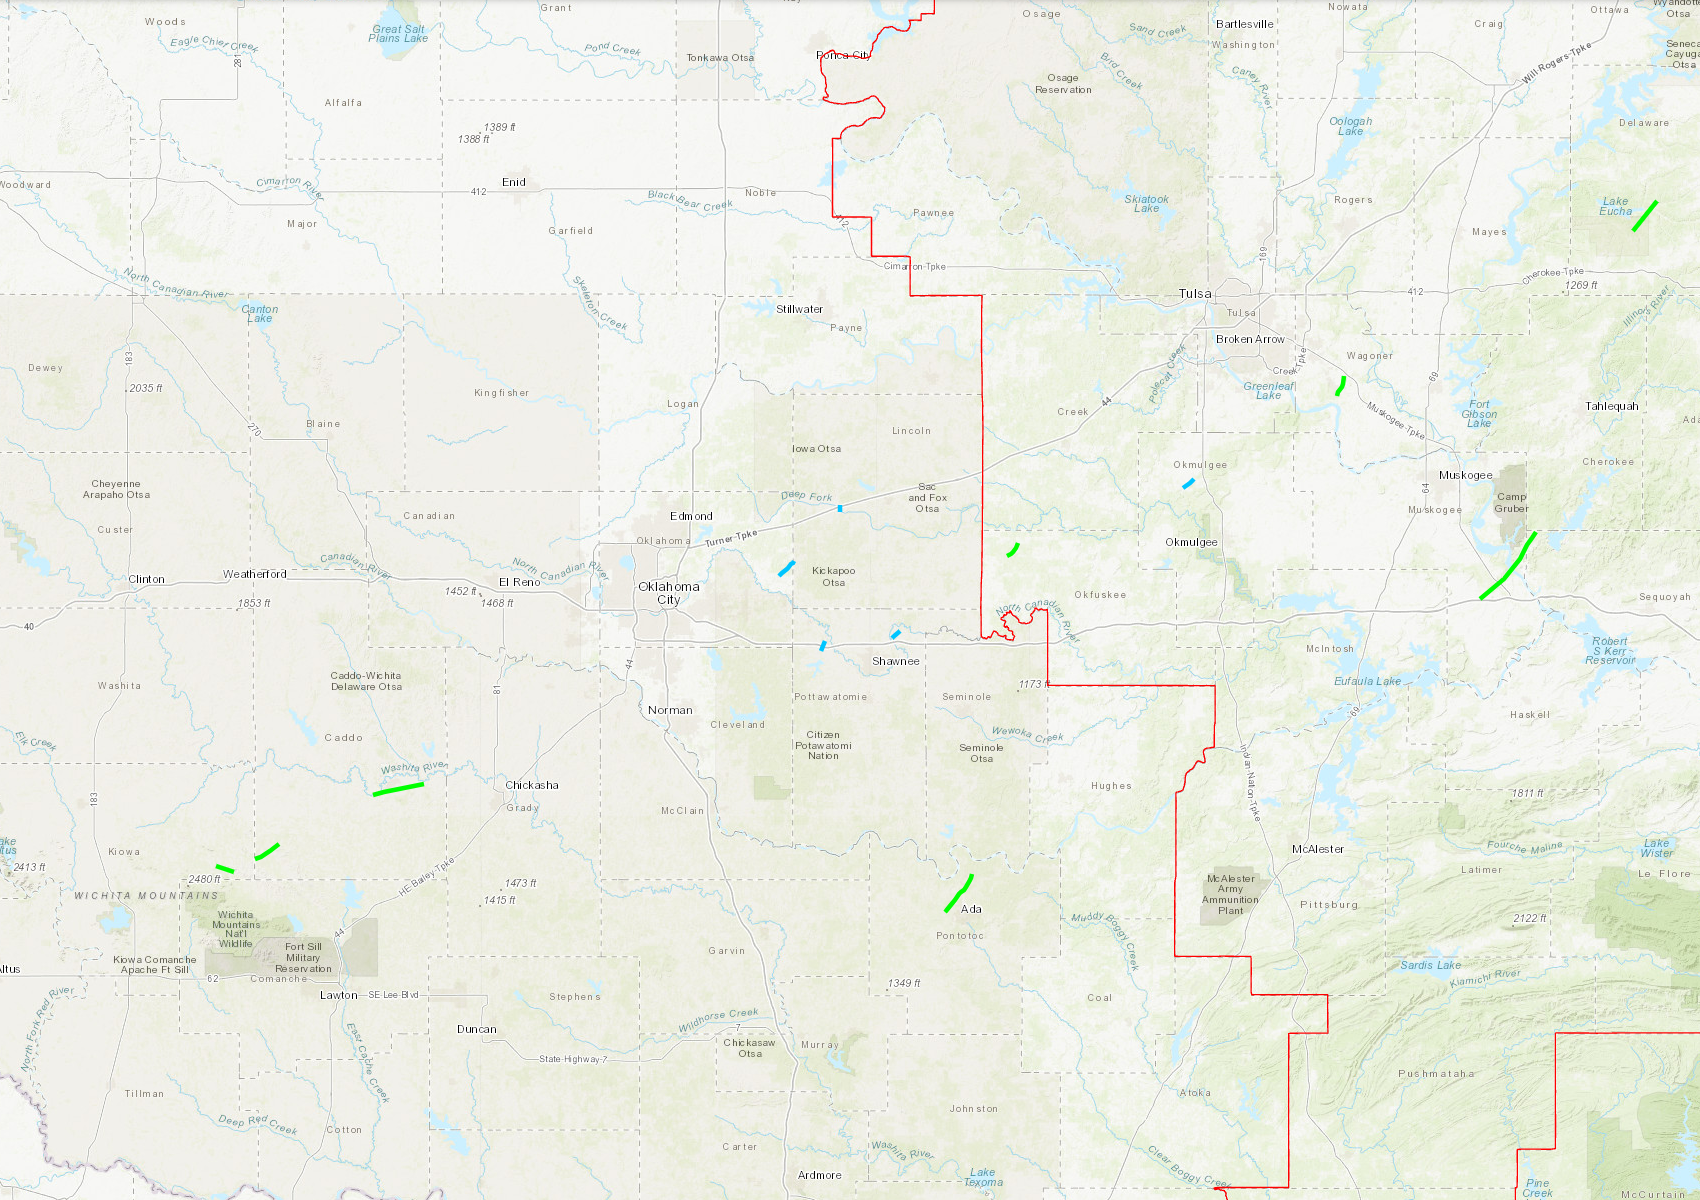 October 10, 2021 Tornado Path Map